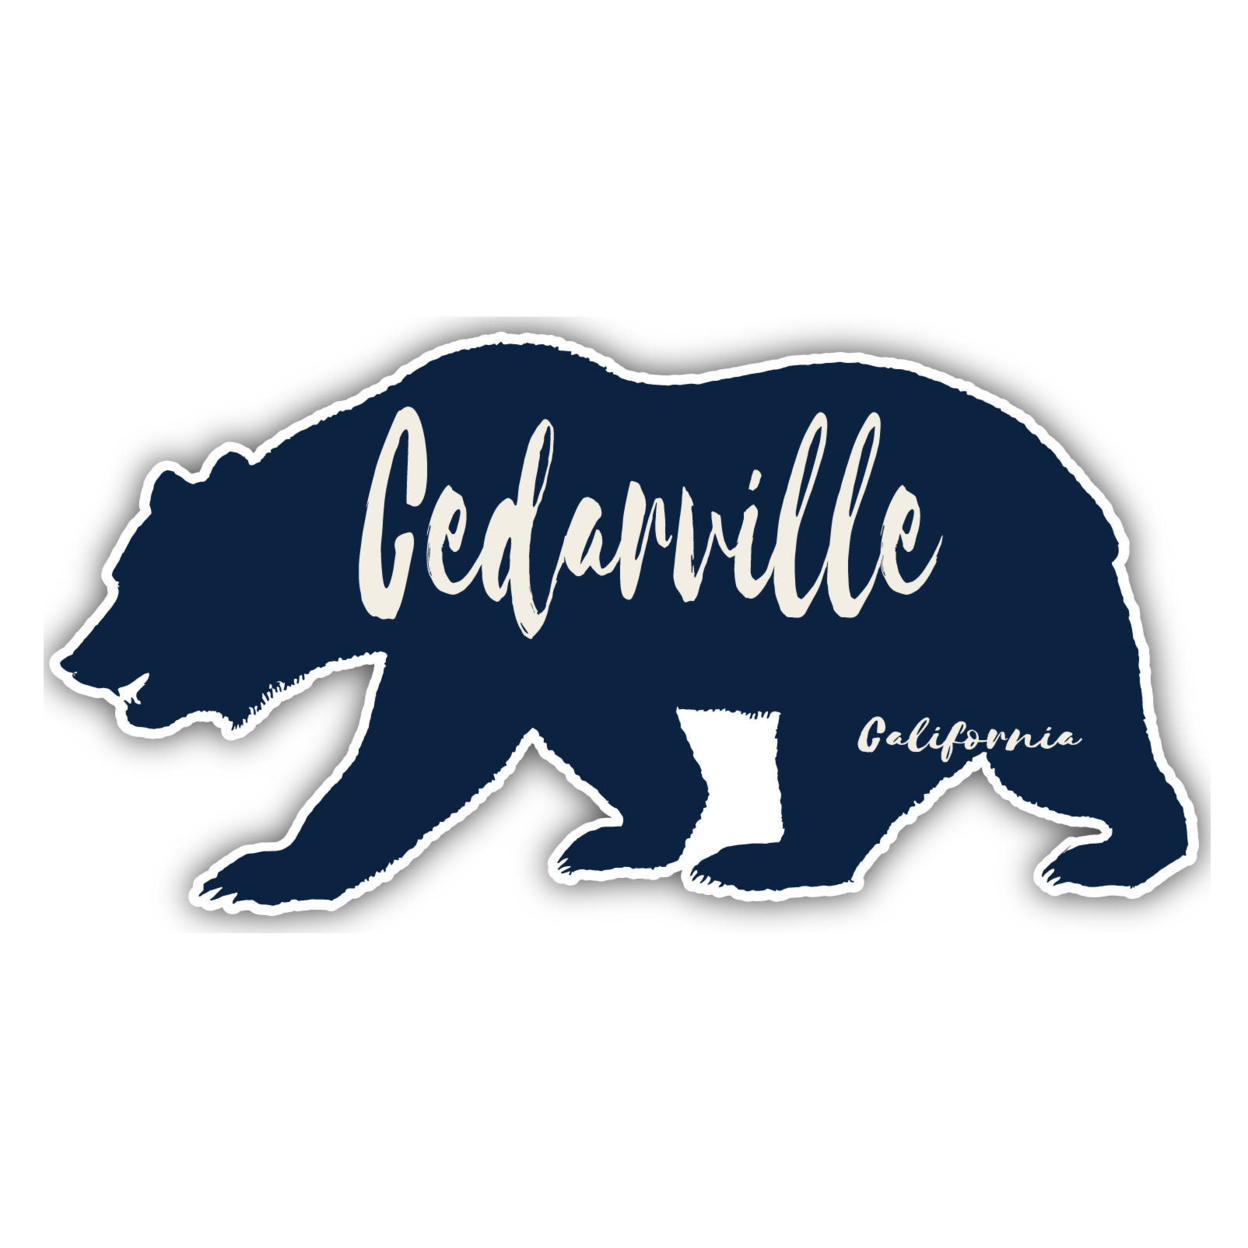 Cedarville California Souvenir Decorative Stickers (Choose Theme And Size) - Single Unit, 6-Inch, Bear